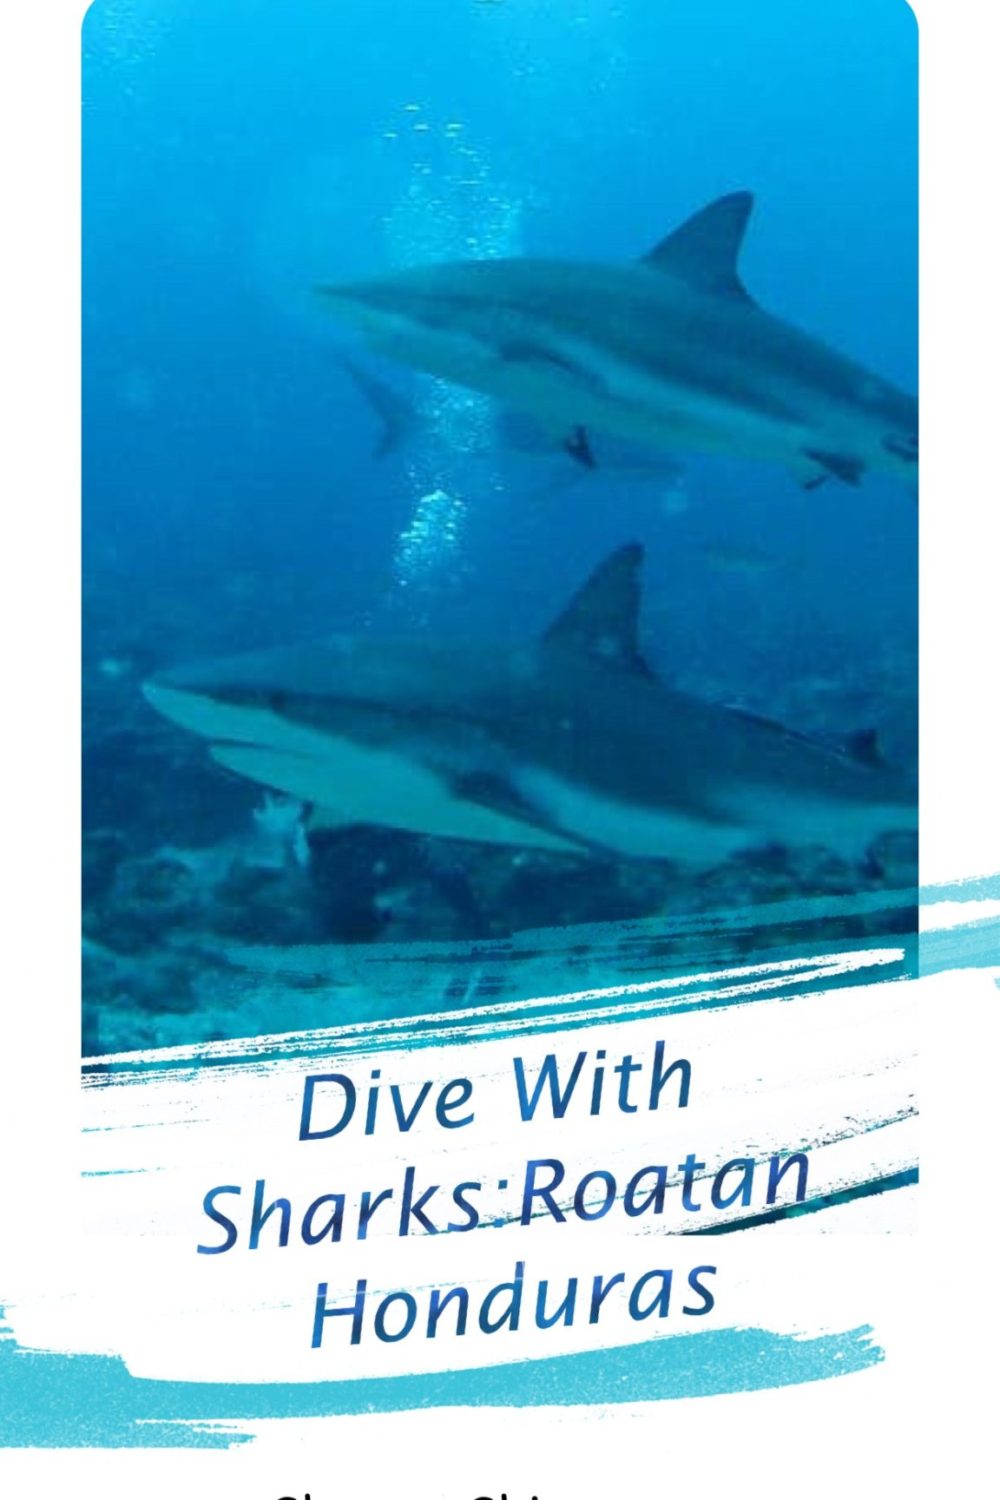 Dive with sharks in Roatan Honduras